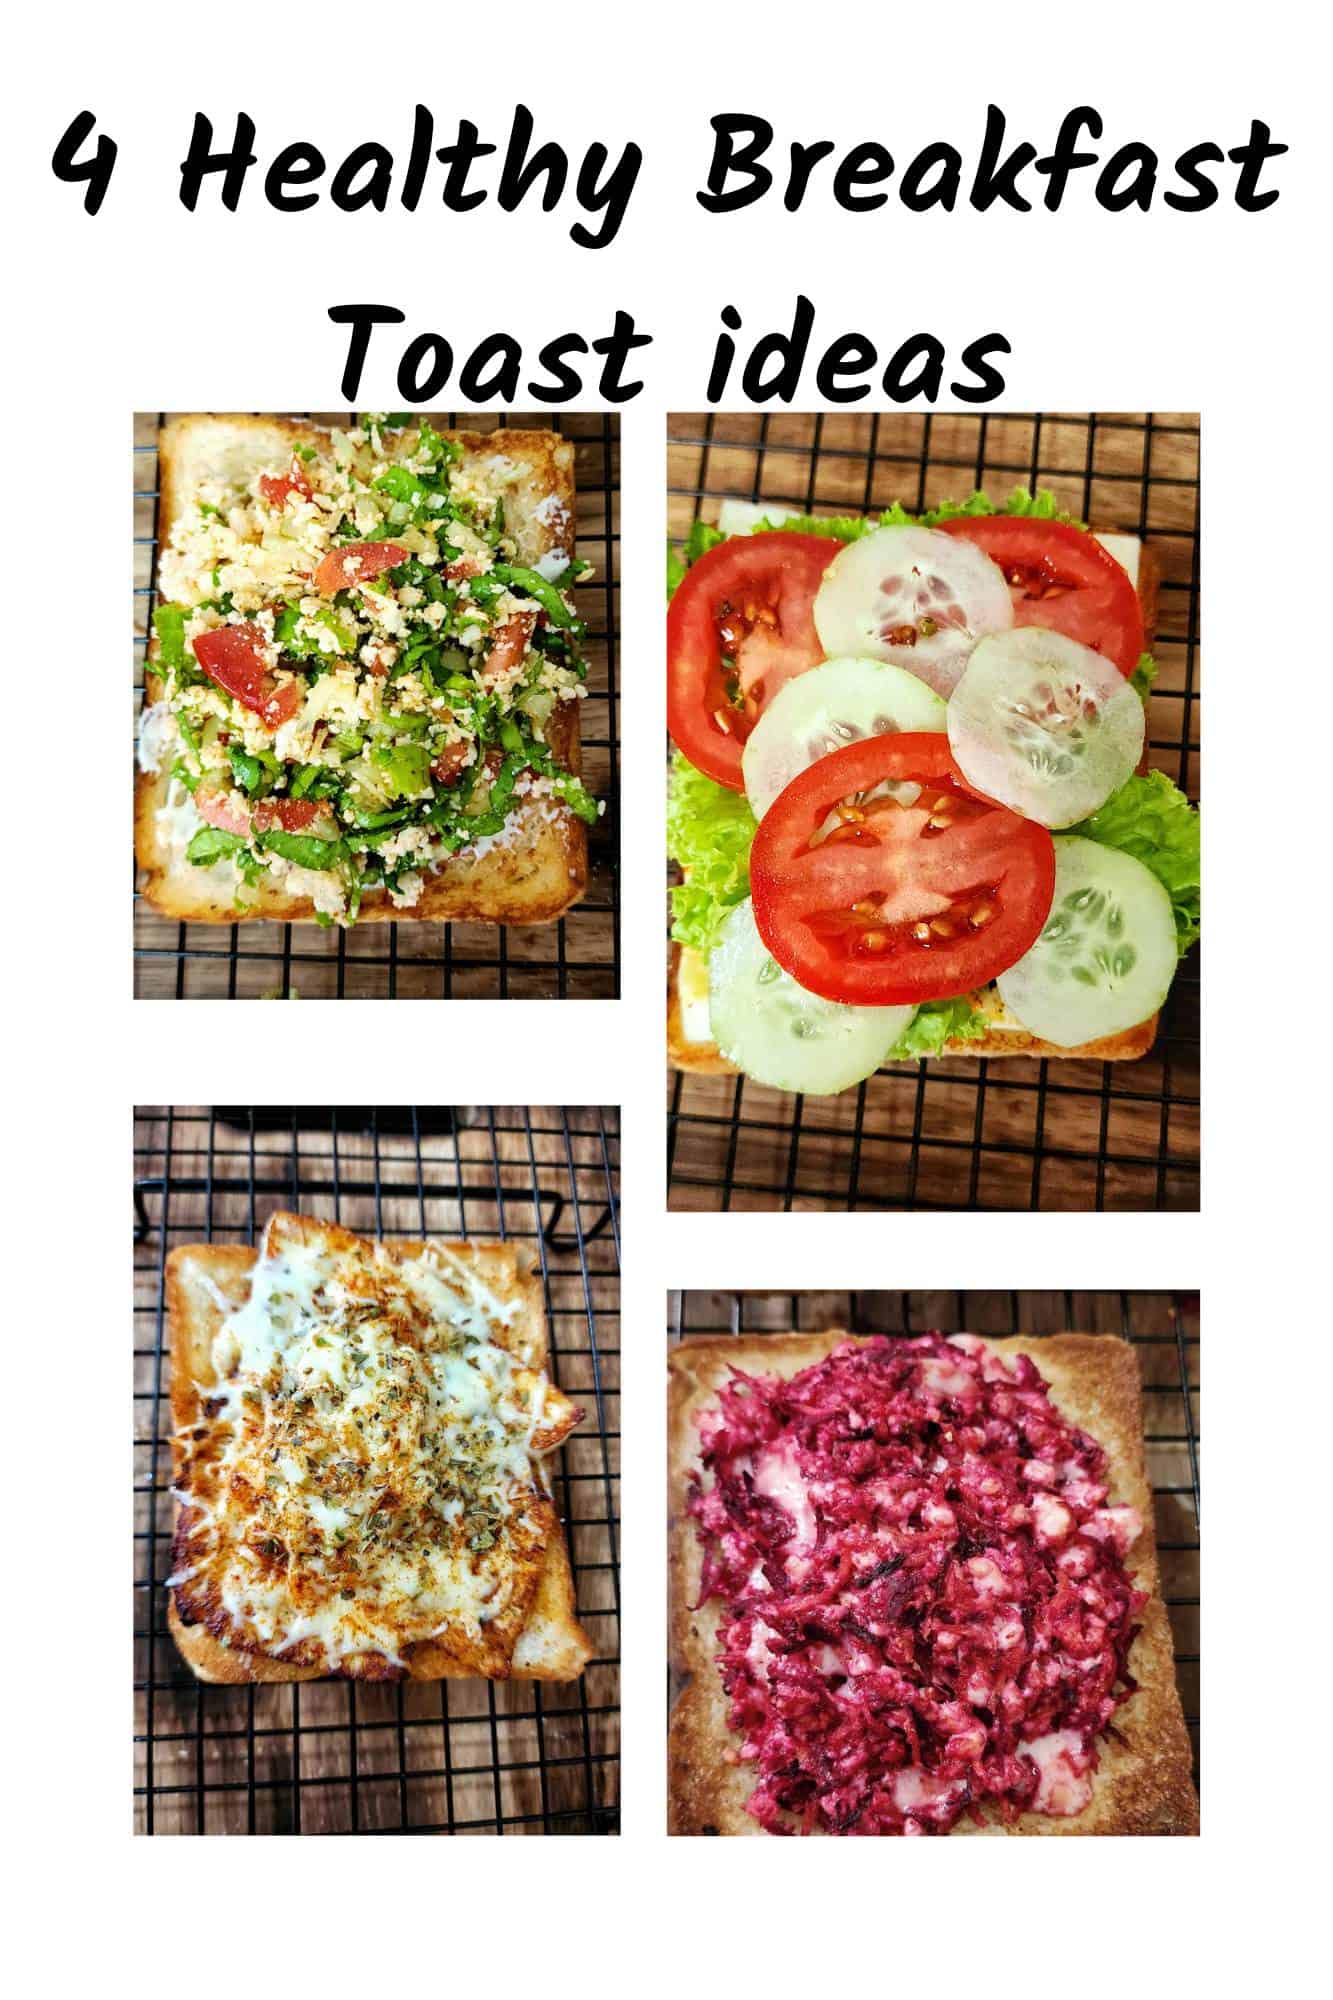 Healthy toast ideas